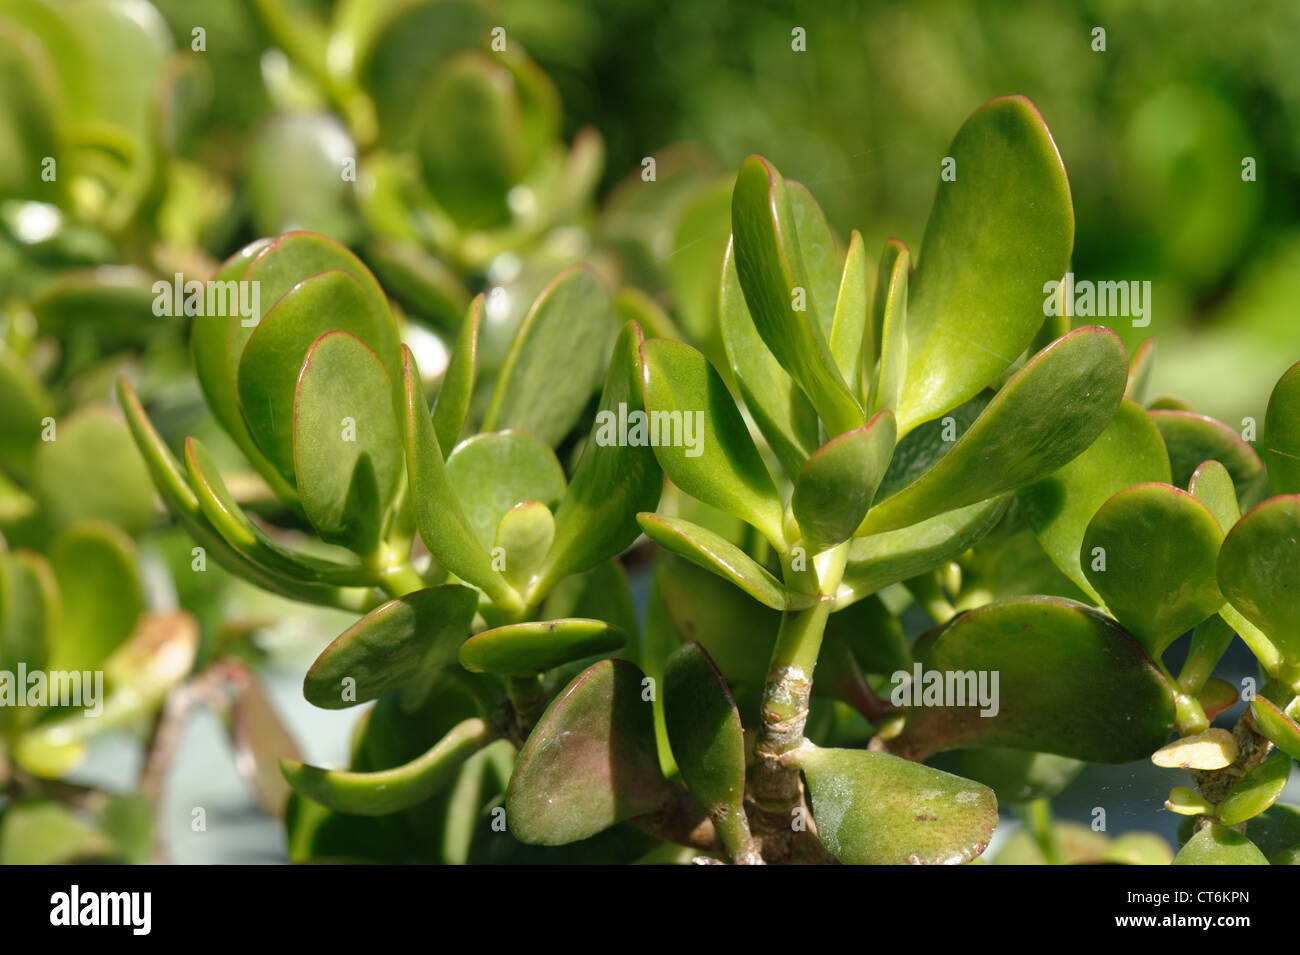 Succulent leaves of a money tree or money plant Crassula ovata Stock Photo